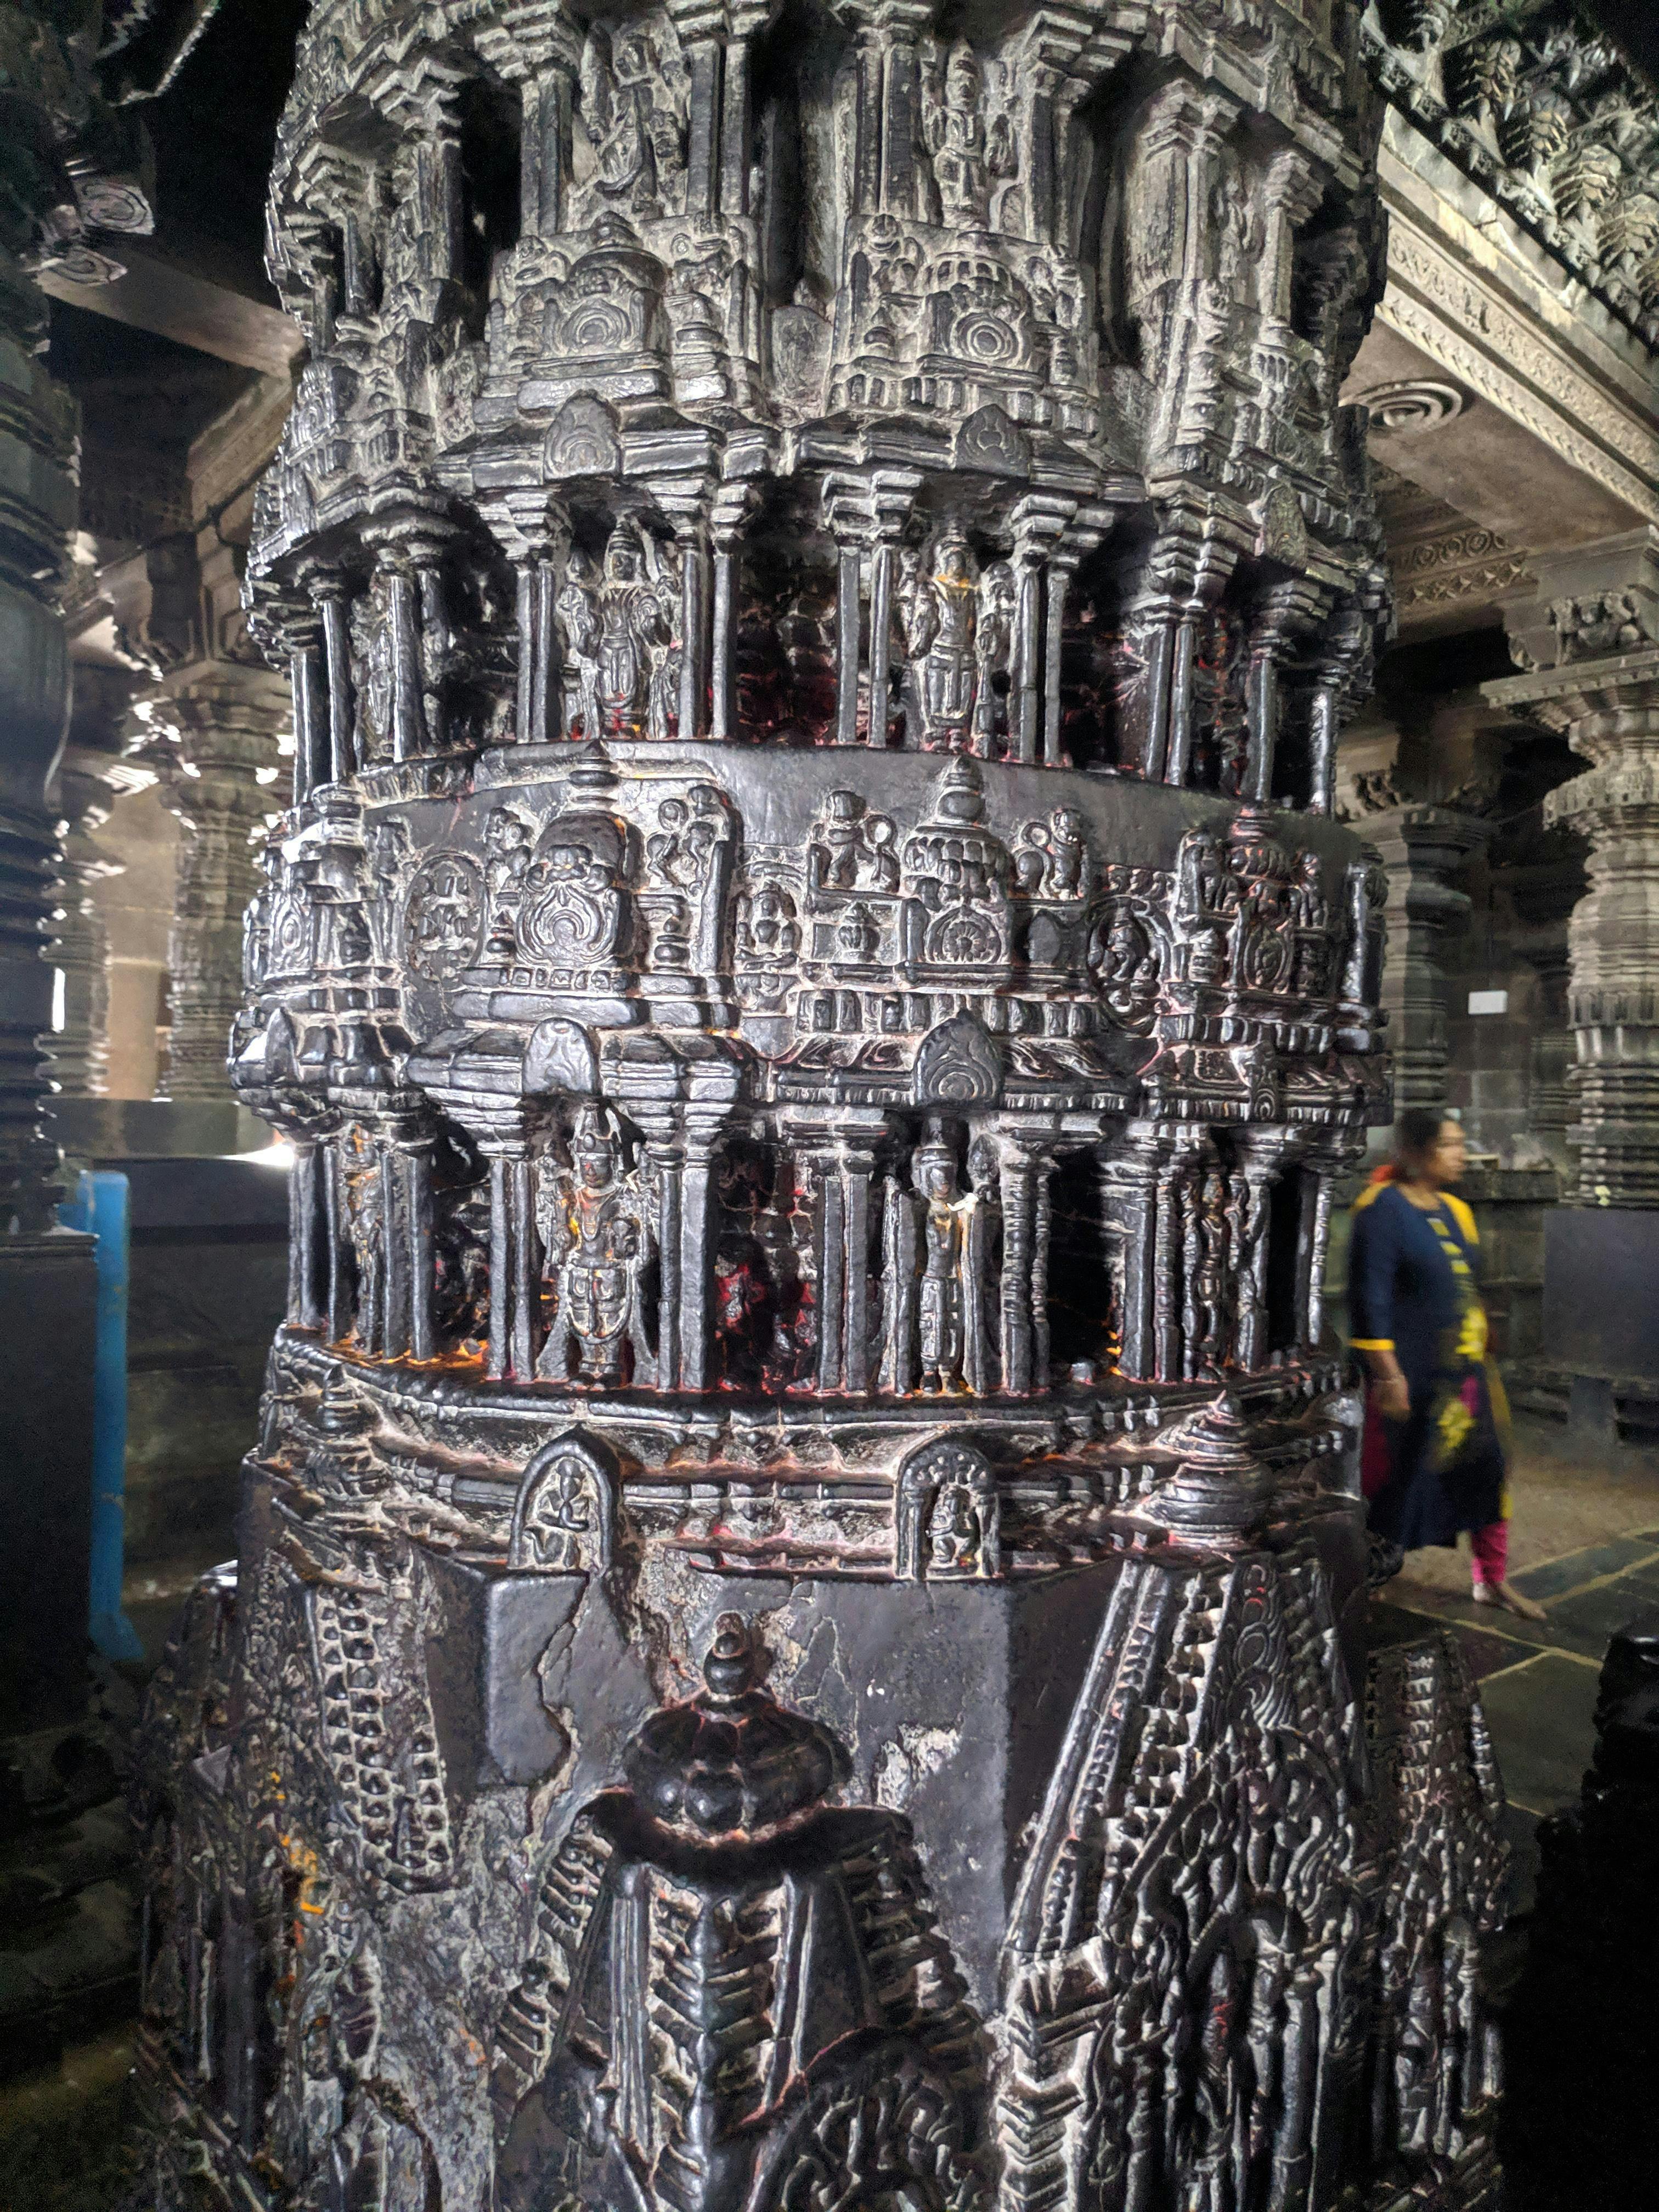 A pillar inside the temple